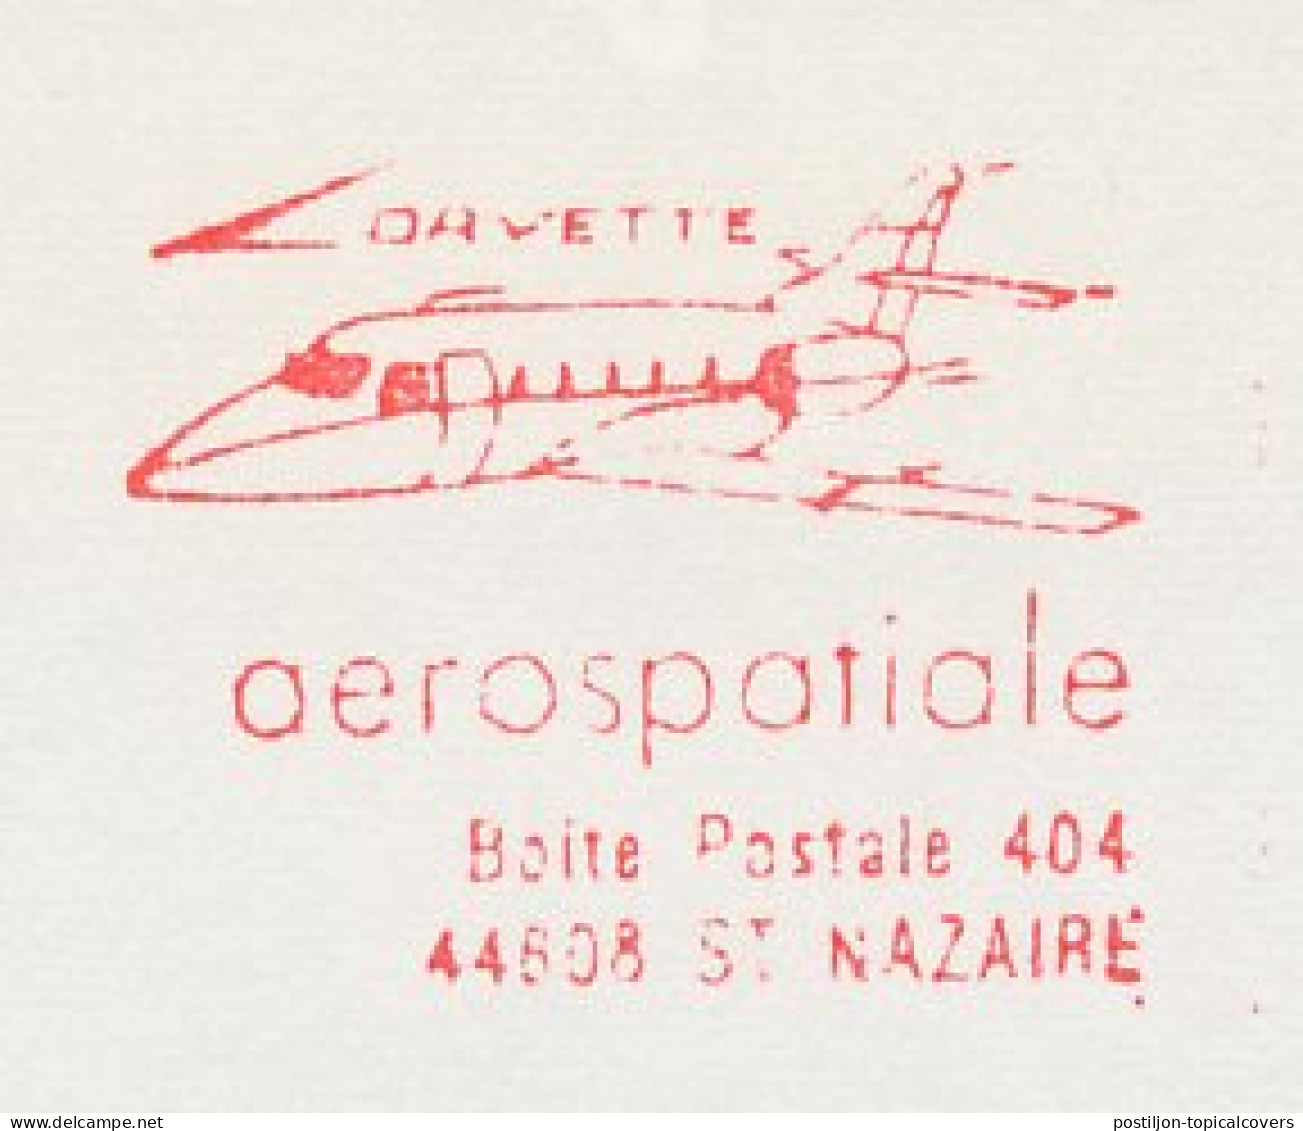 Meter Cut France 1984 Airplane - Aerospitale - Davette - Flugzeuge